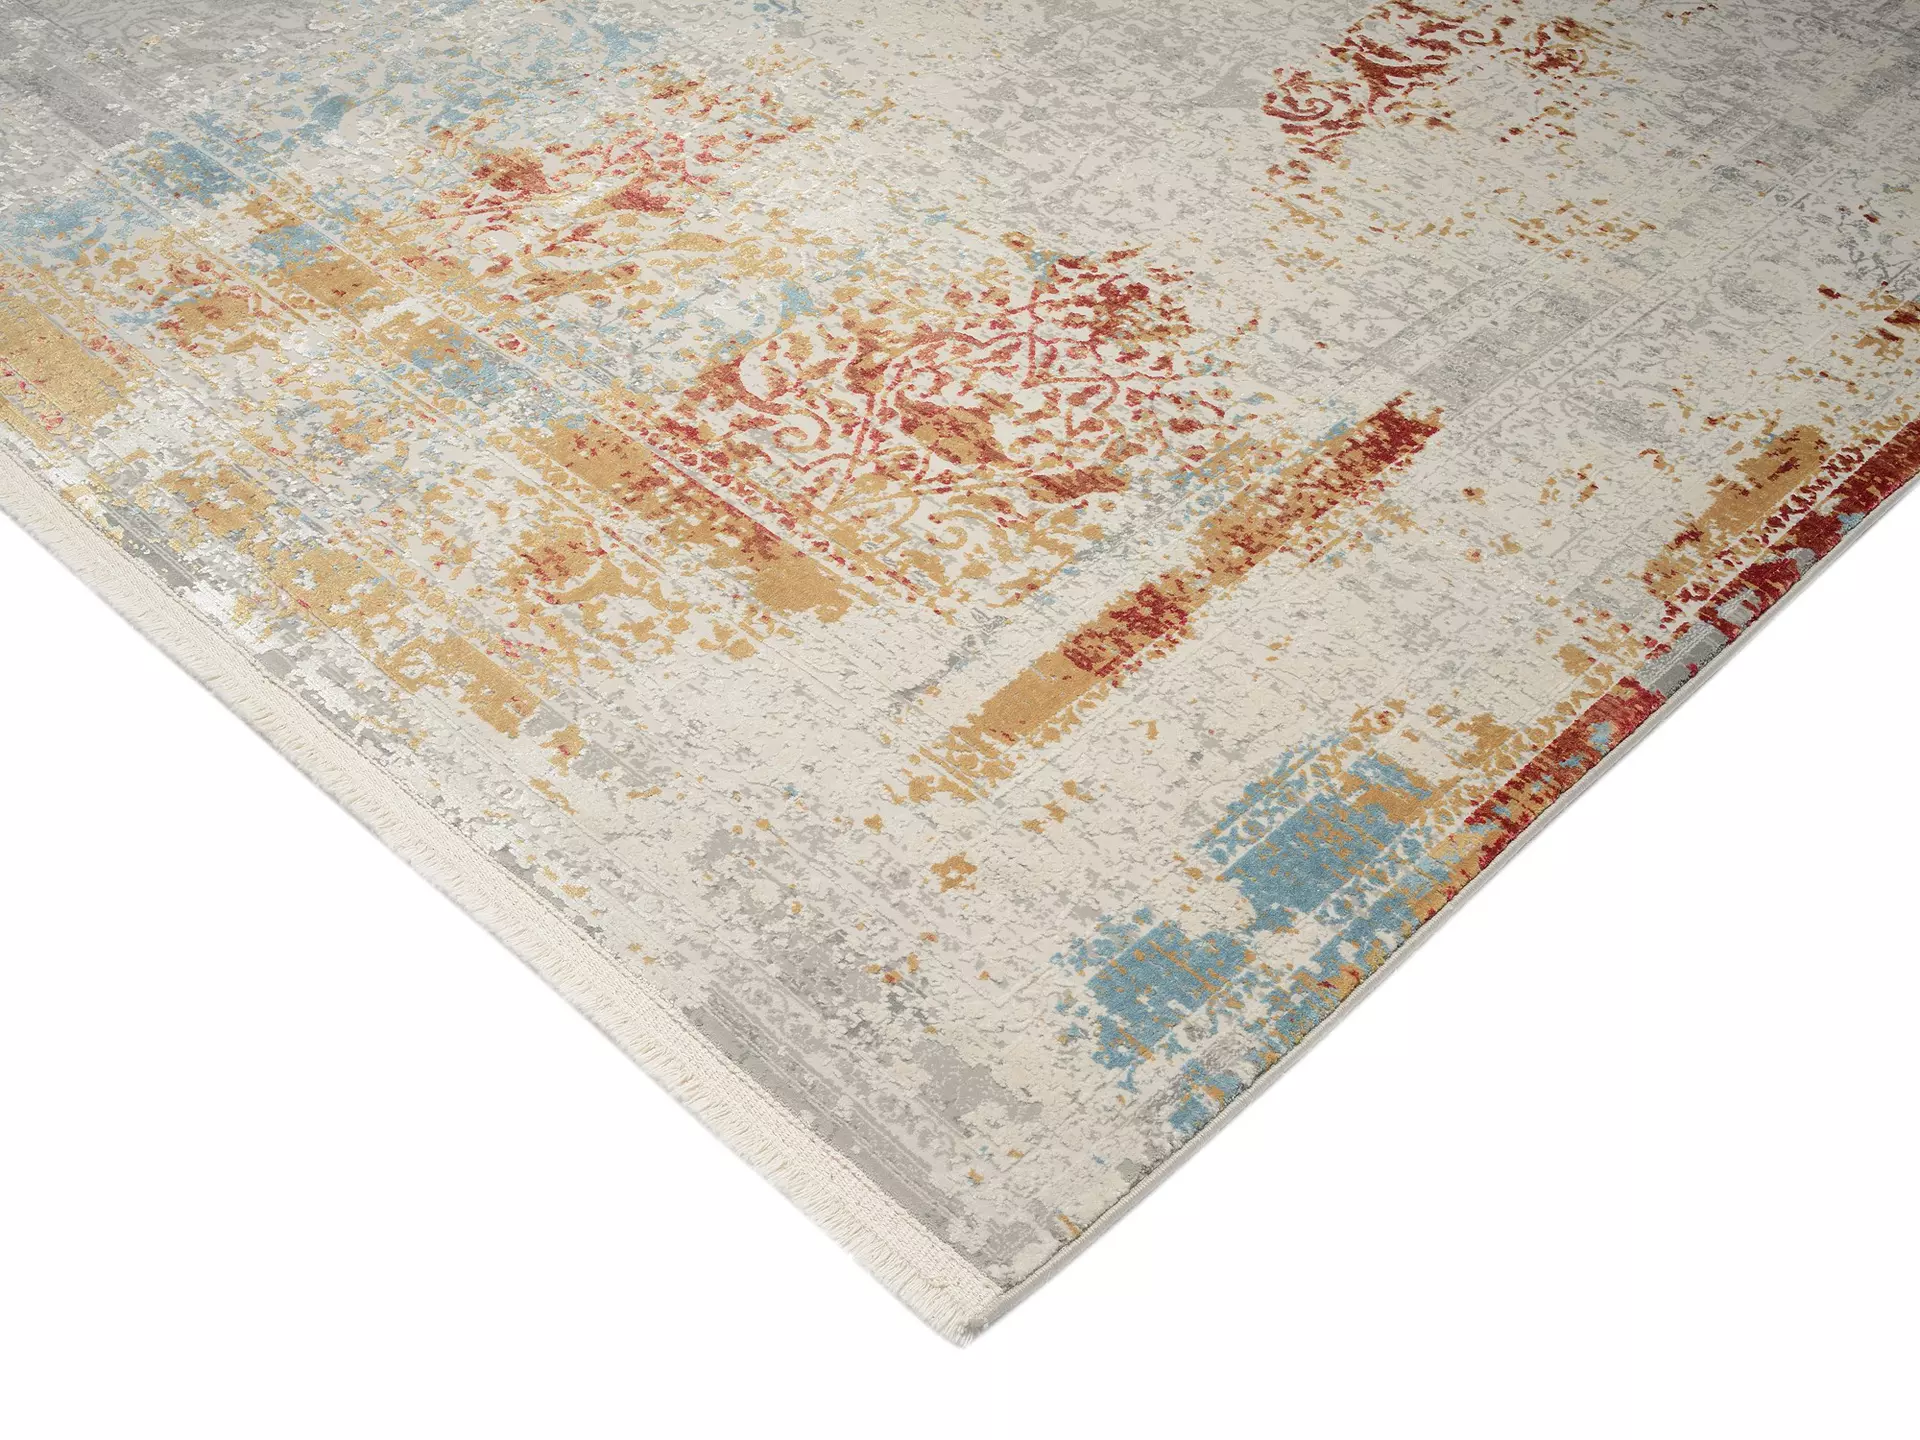 Maschinenwebteppich OPERA DELUXE Musterring Textil 160 x 230 cm